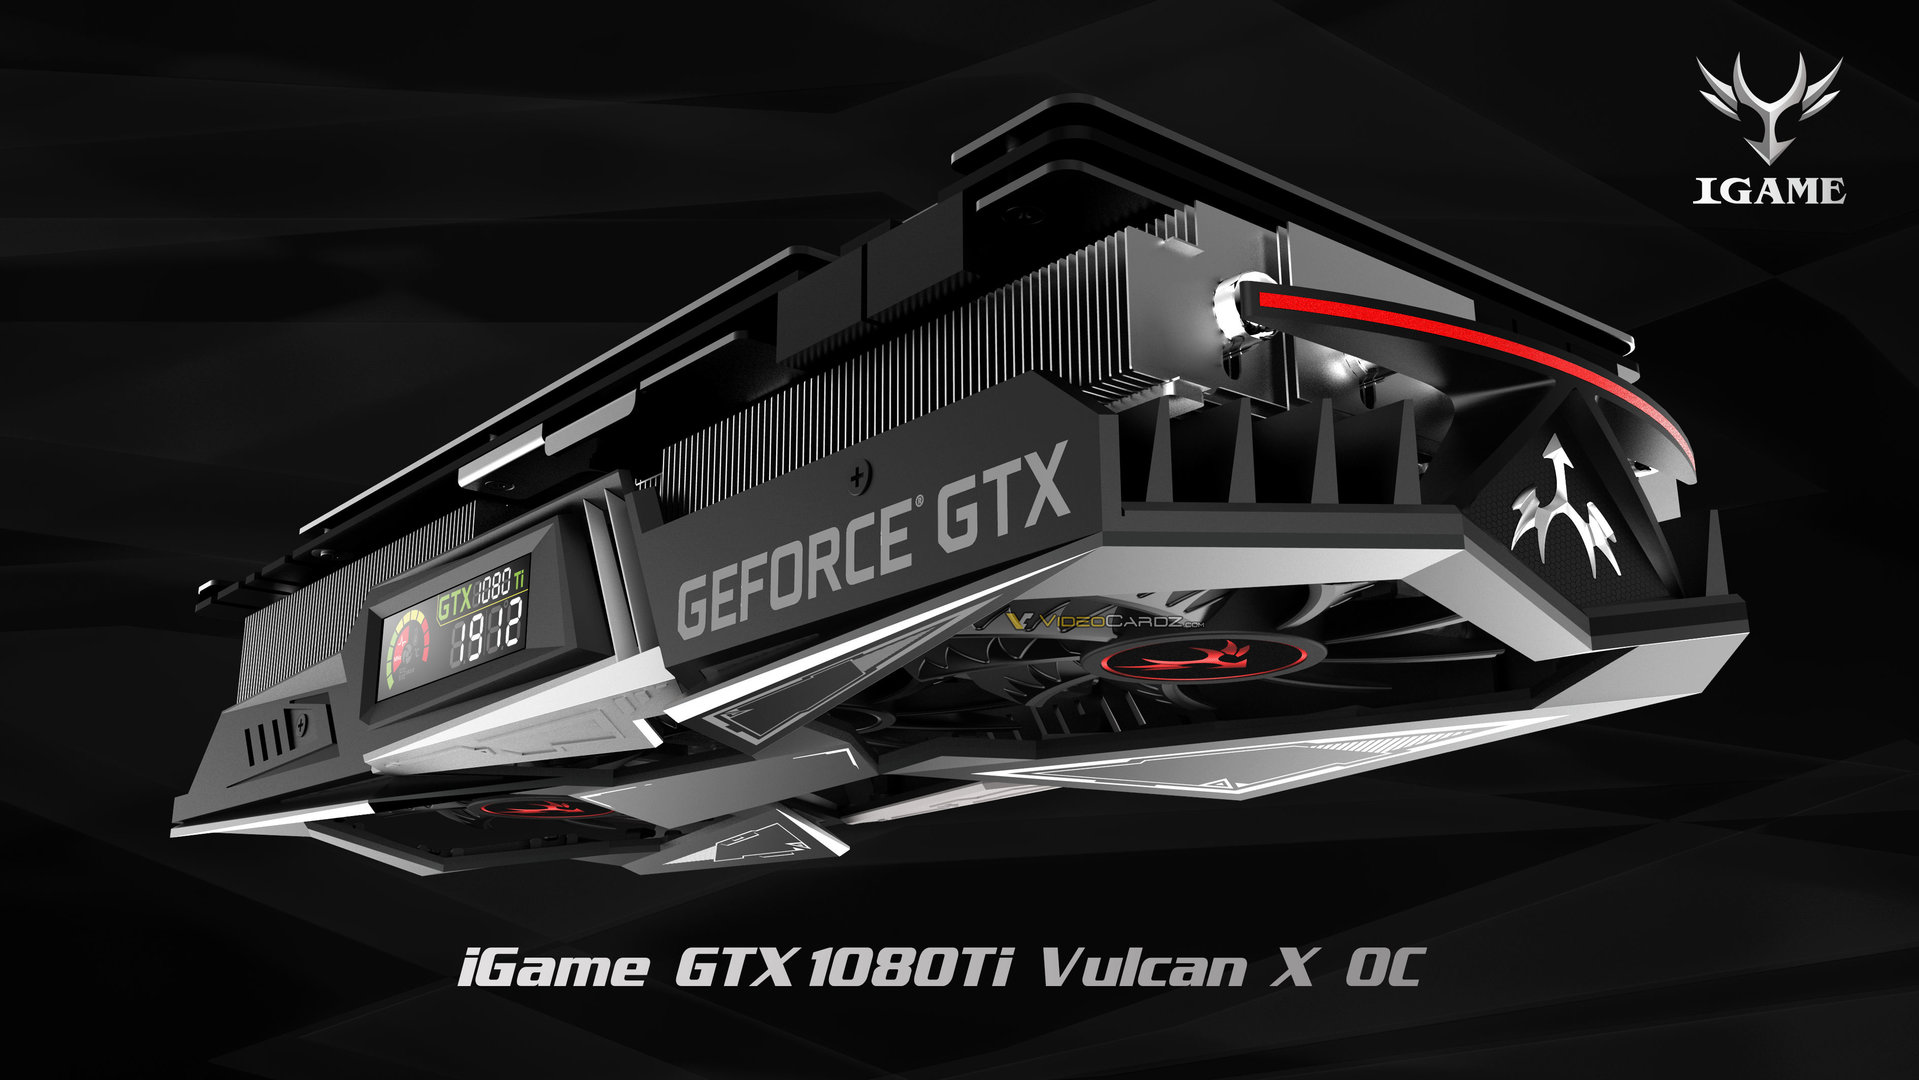 Colorful iGame GTX 1080 Ti Vulcan X OC